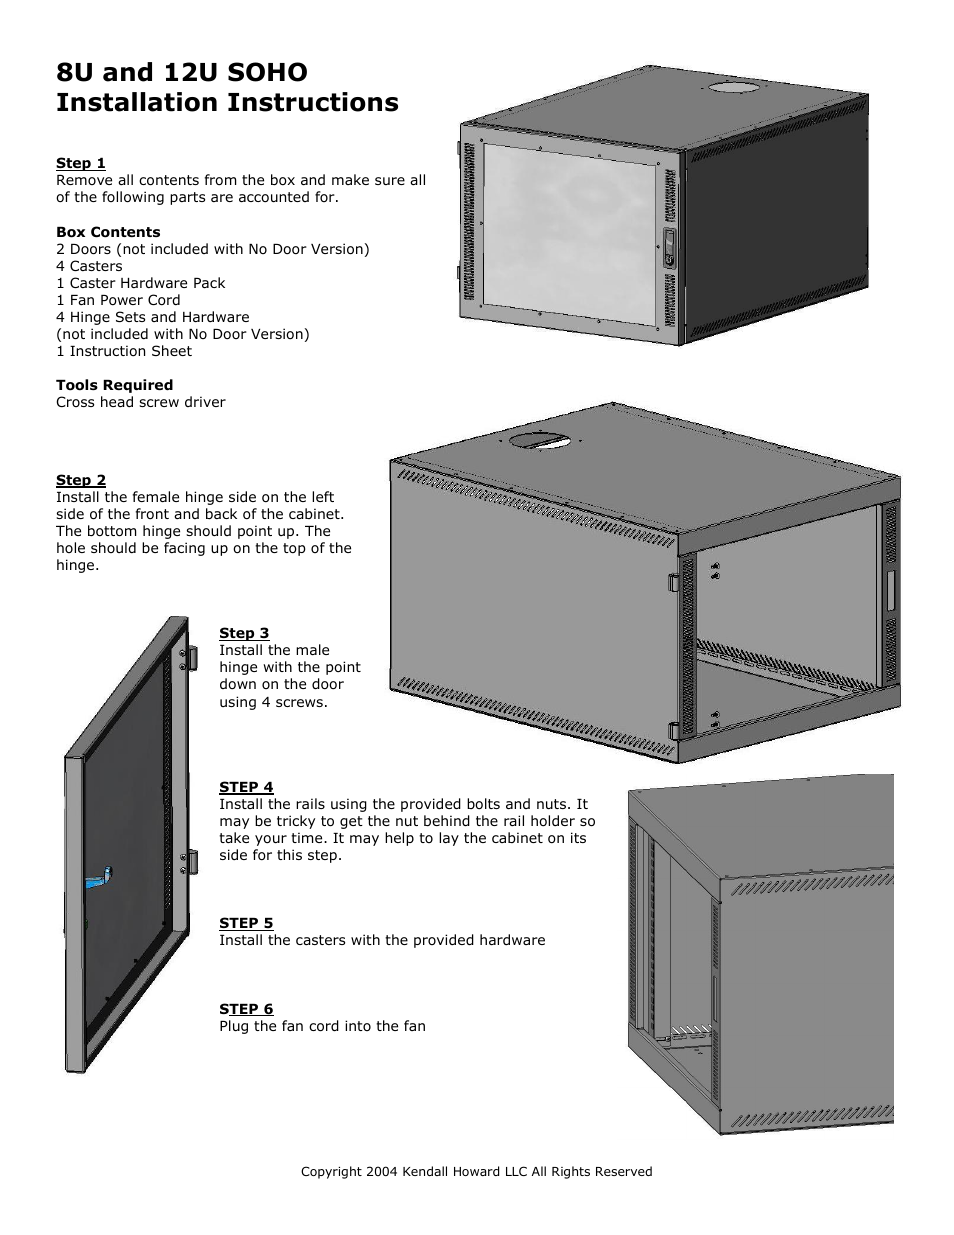 1932-3-201-12 12U Compact SOHO Server Cabinet - No Doors